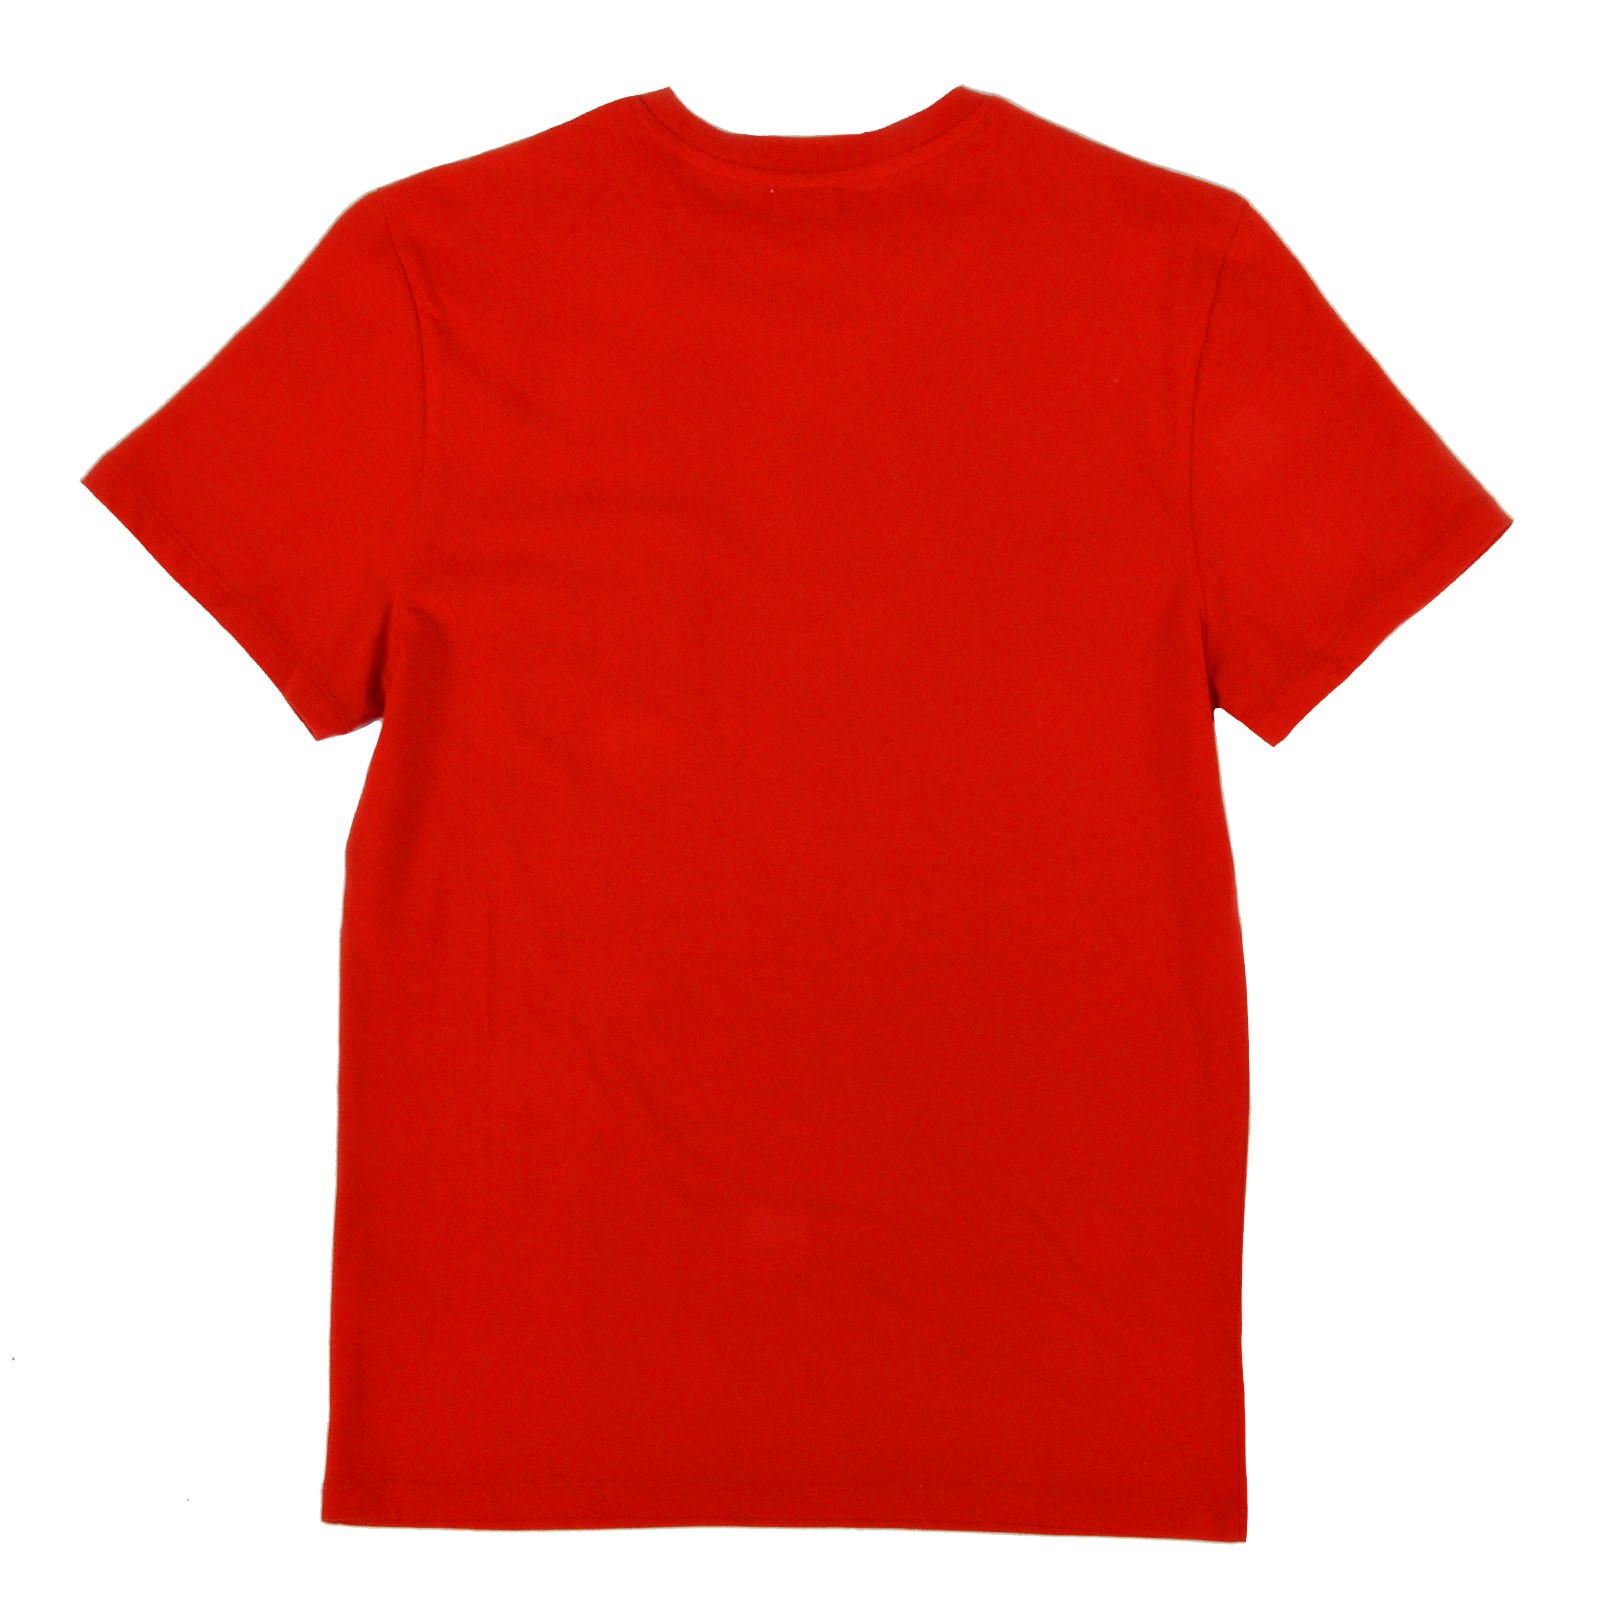 Red T Shirt PNG Clip Art - Best WEB Clipart